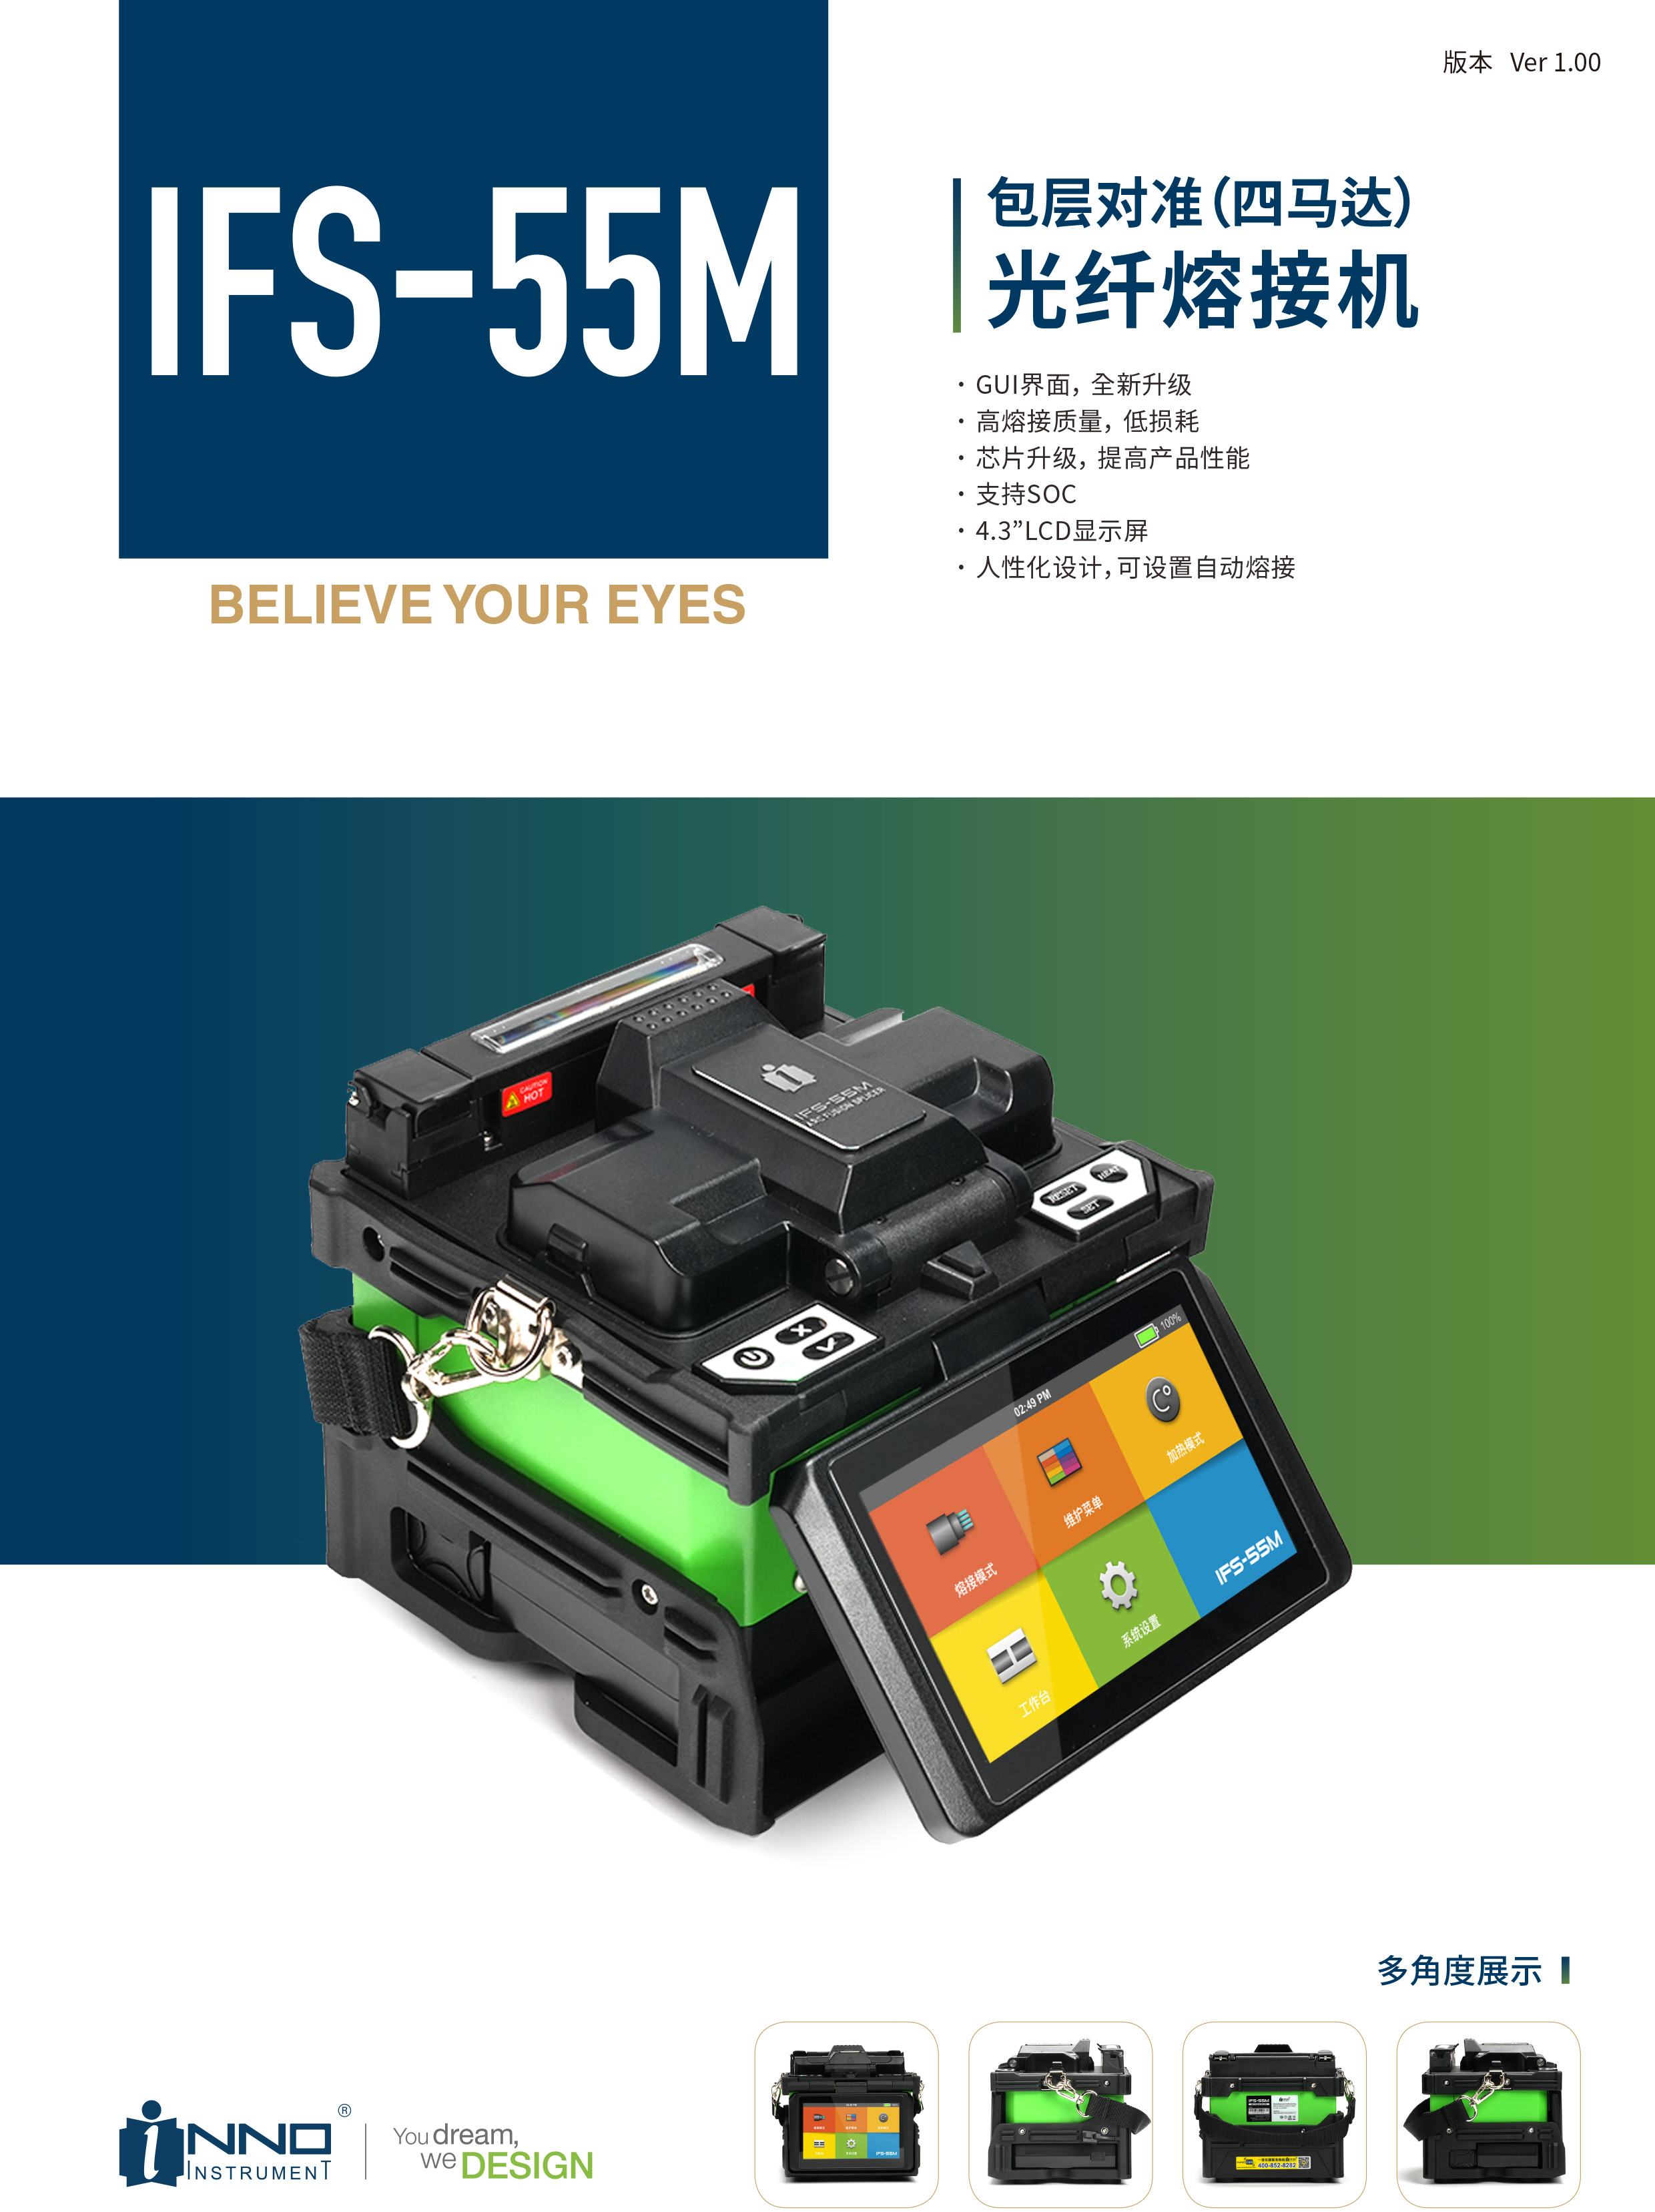 IFS-55M_Catalog ver1.00(1)-1.jpg